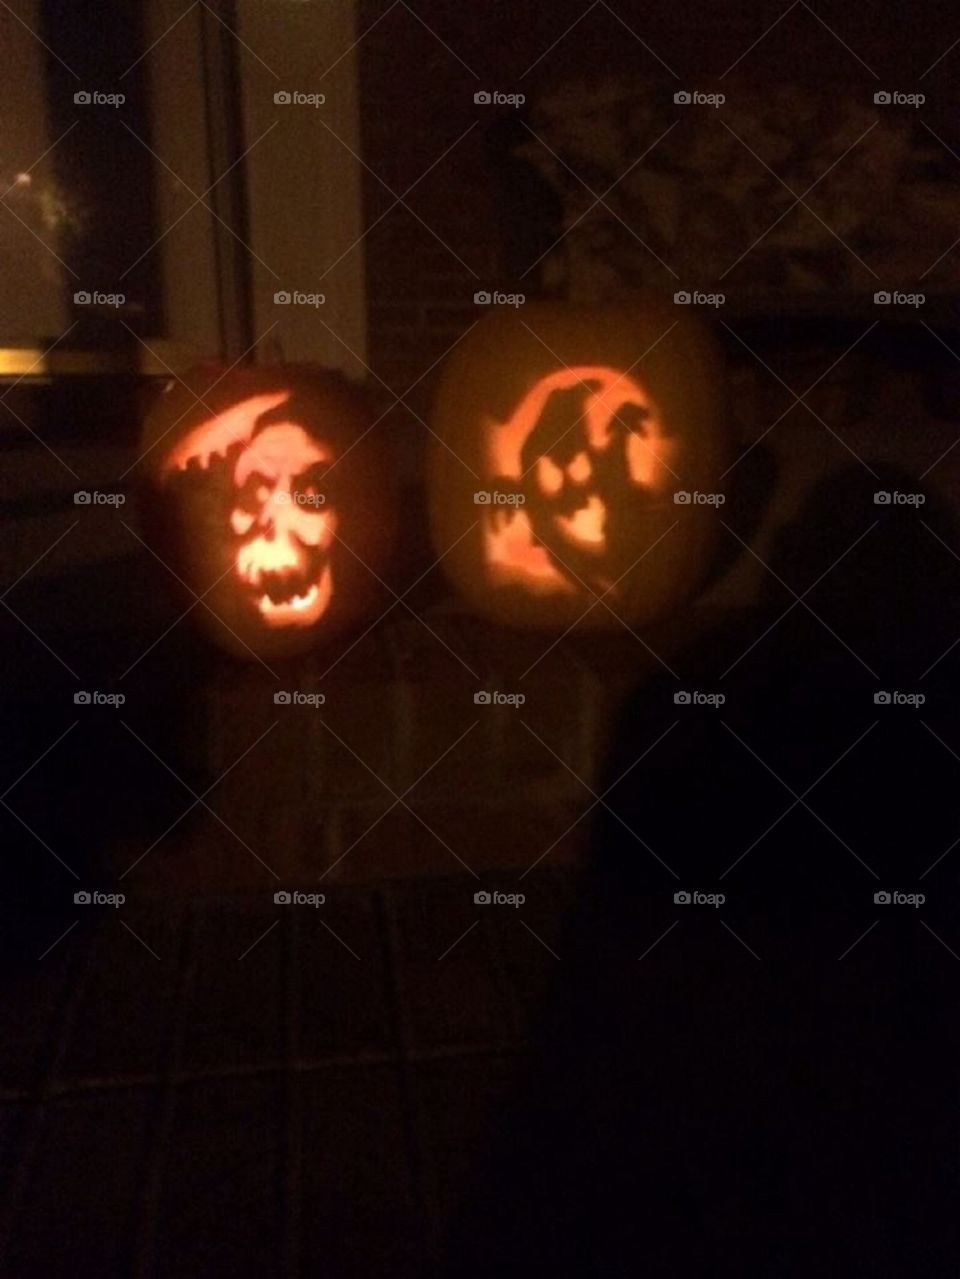 My pumpkins